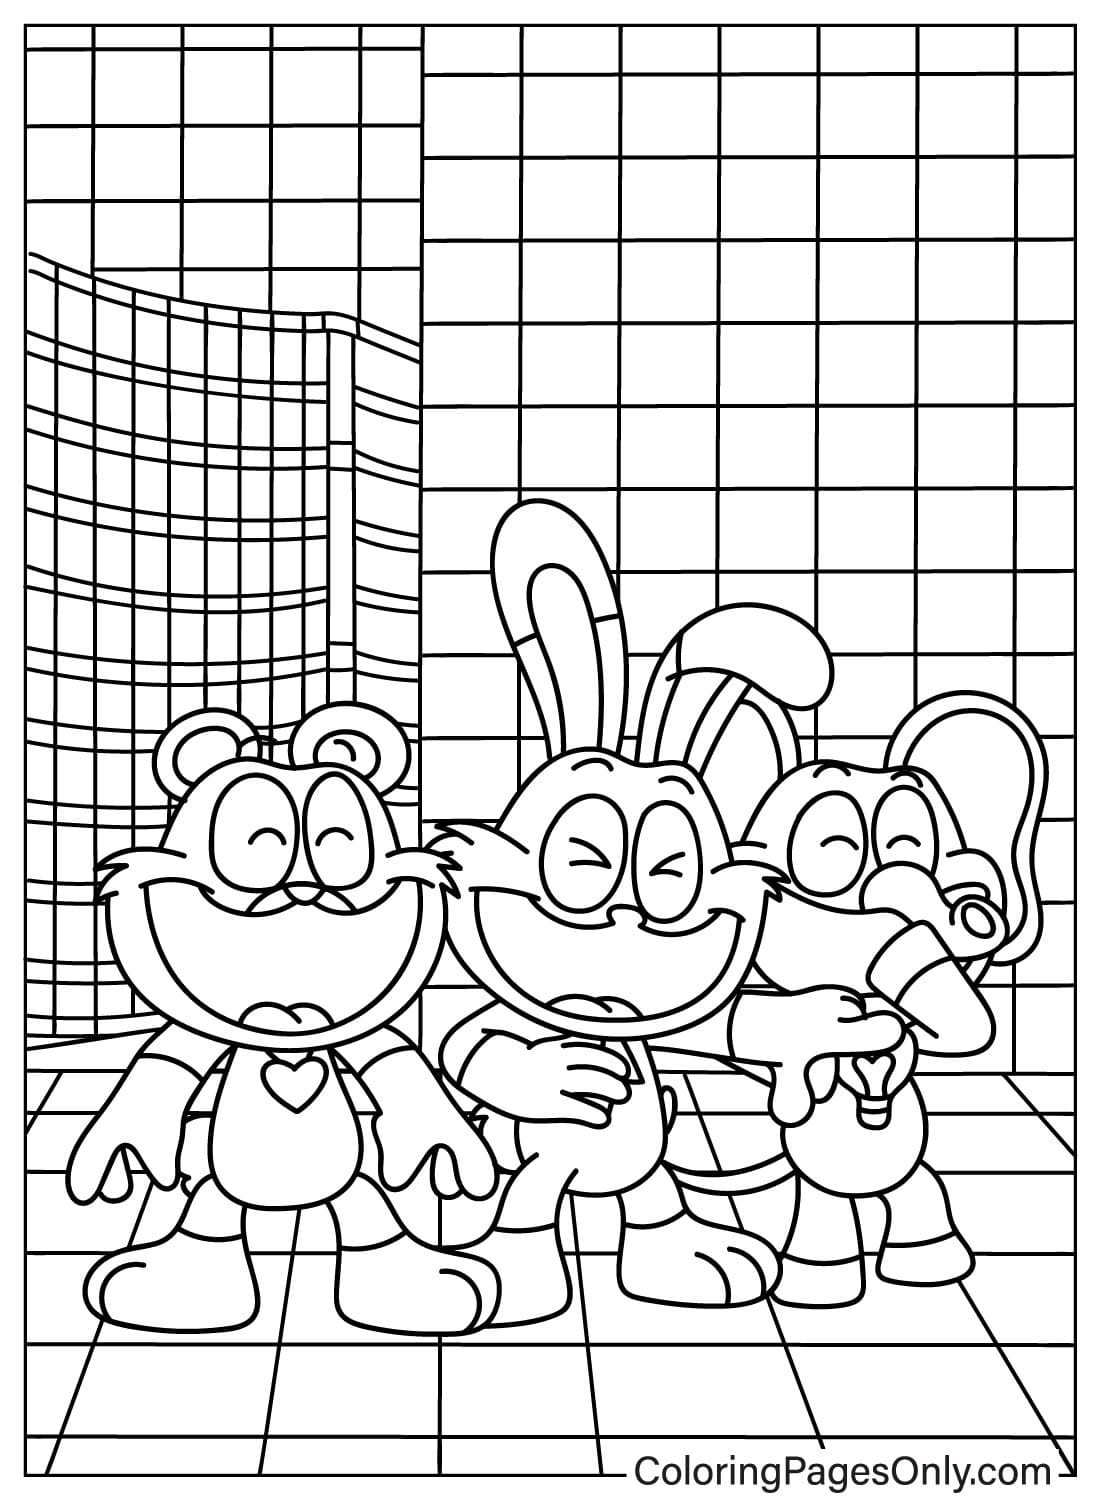 Bubba Bubbaphant and Hoppy Hopscotch, Bobby BearHug Coloring Page from Bubba Bubbaphant